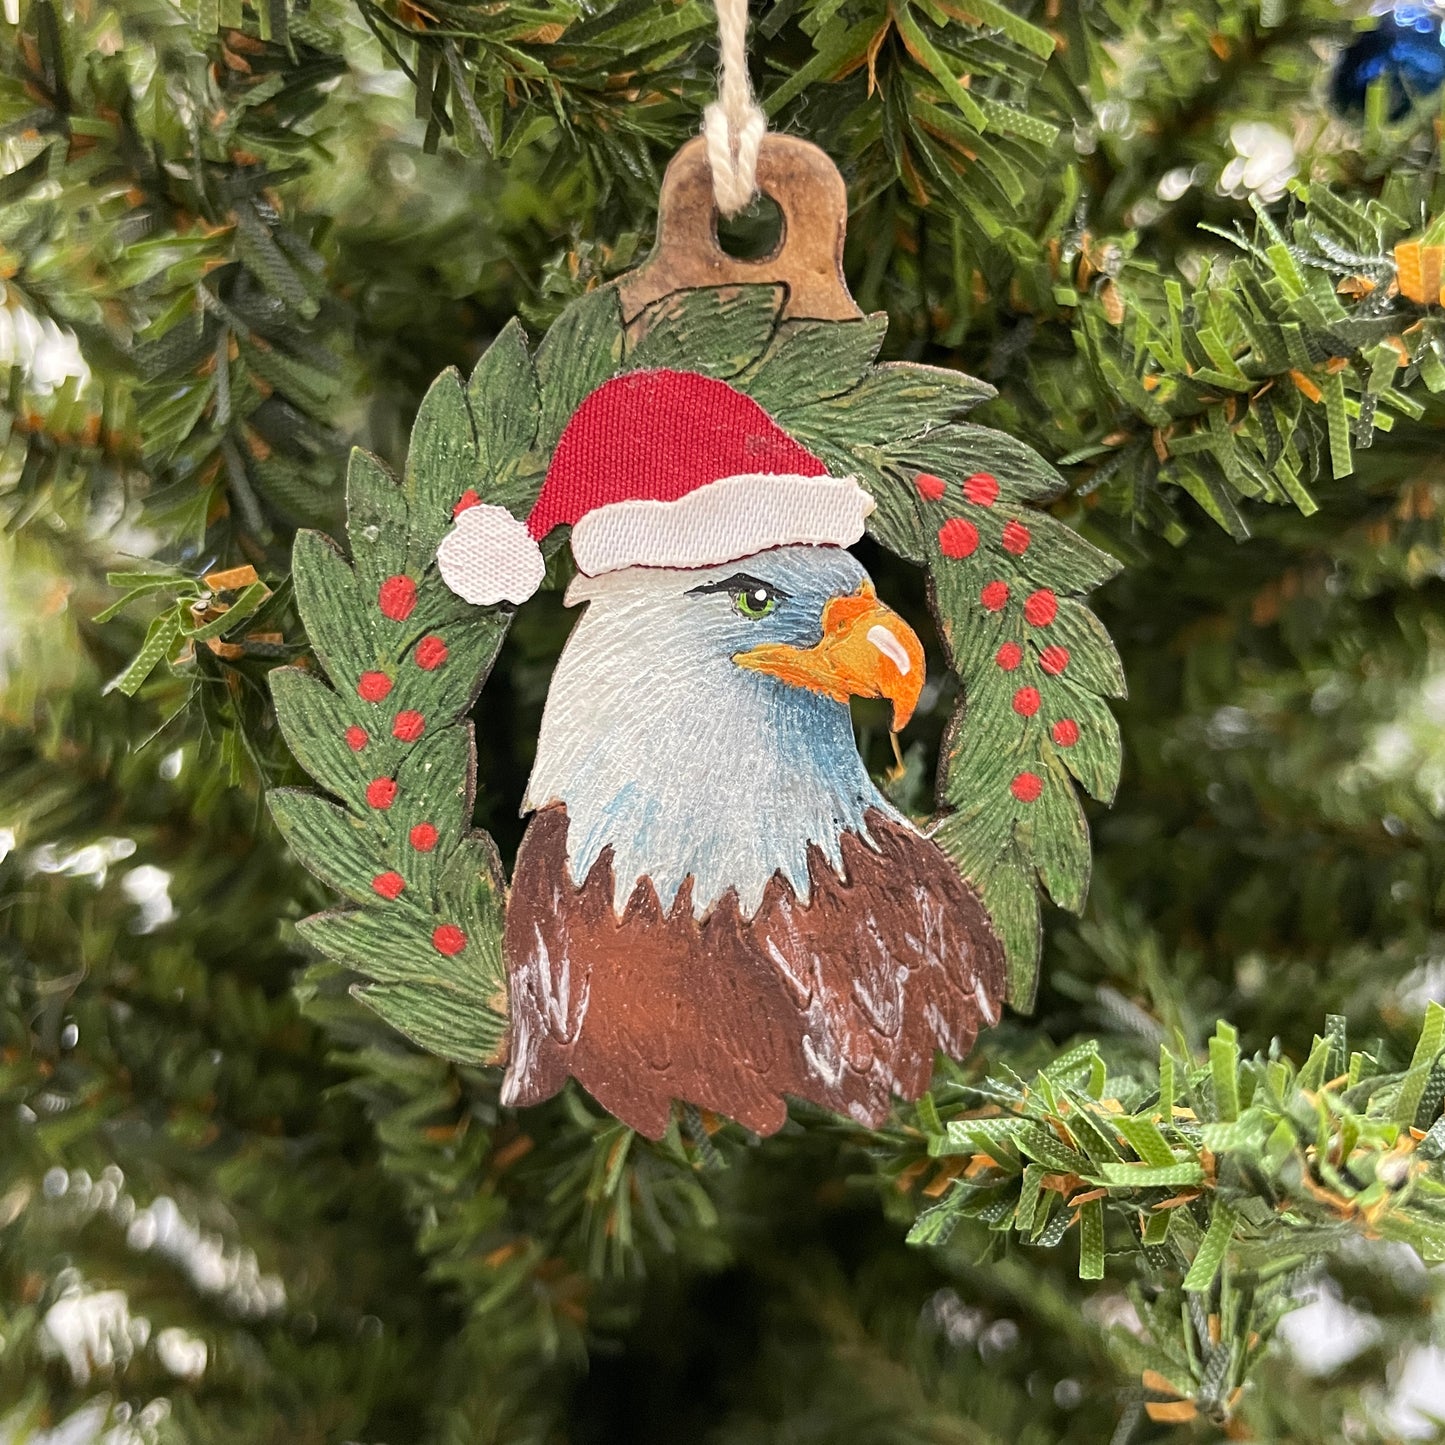 Eagle Holiday Ornament